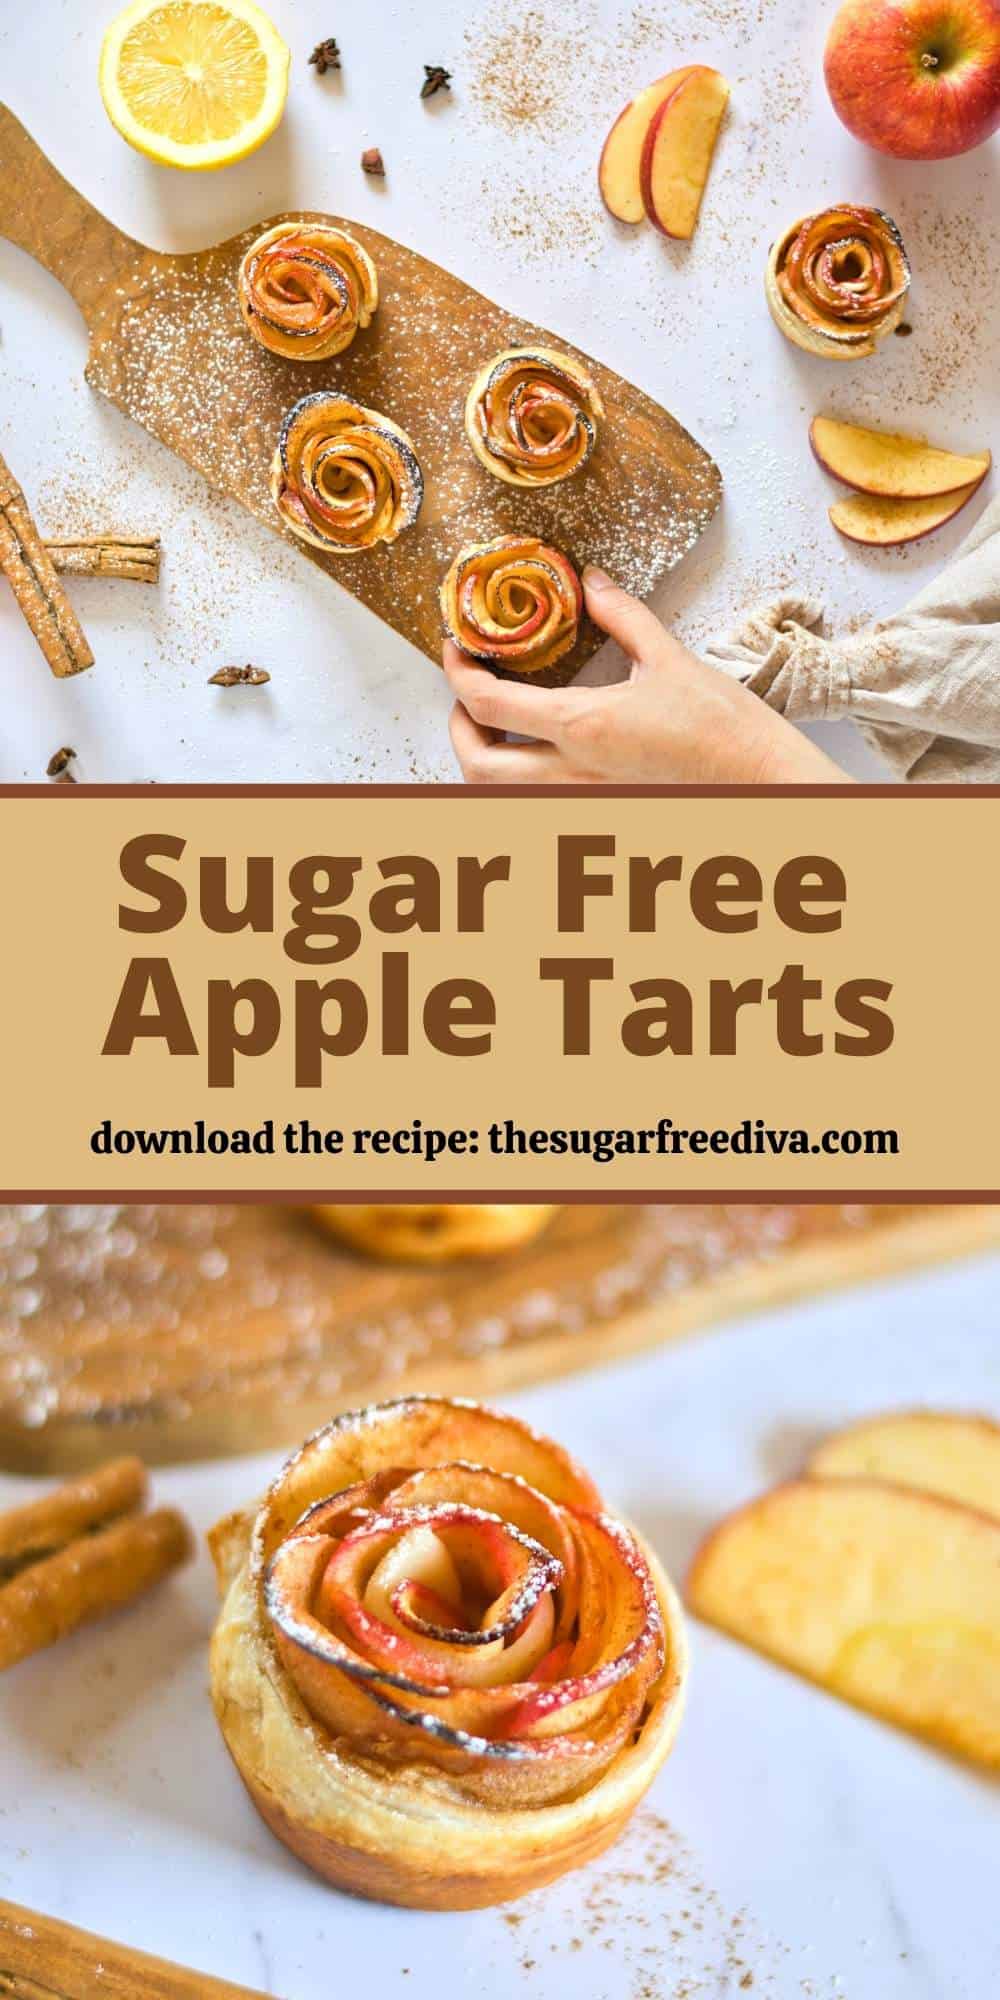 Sugar Free Apple Tarts